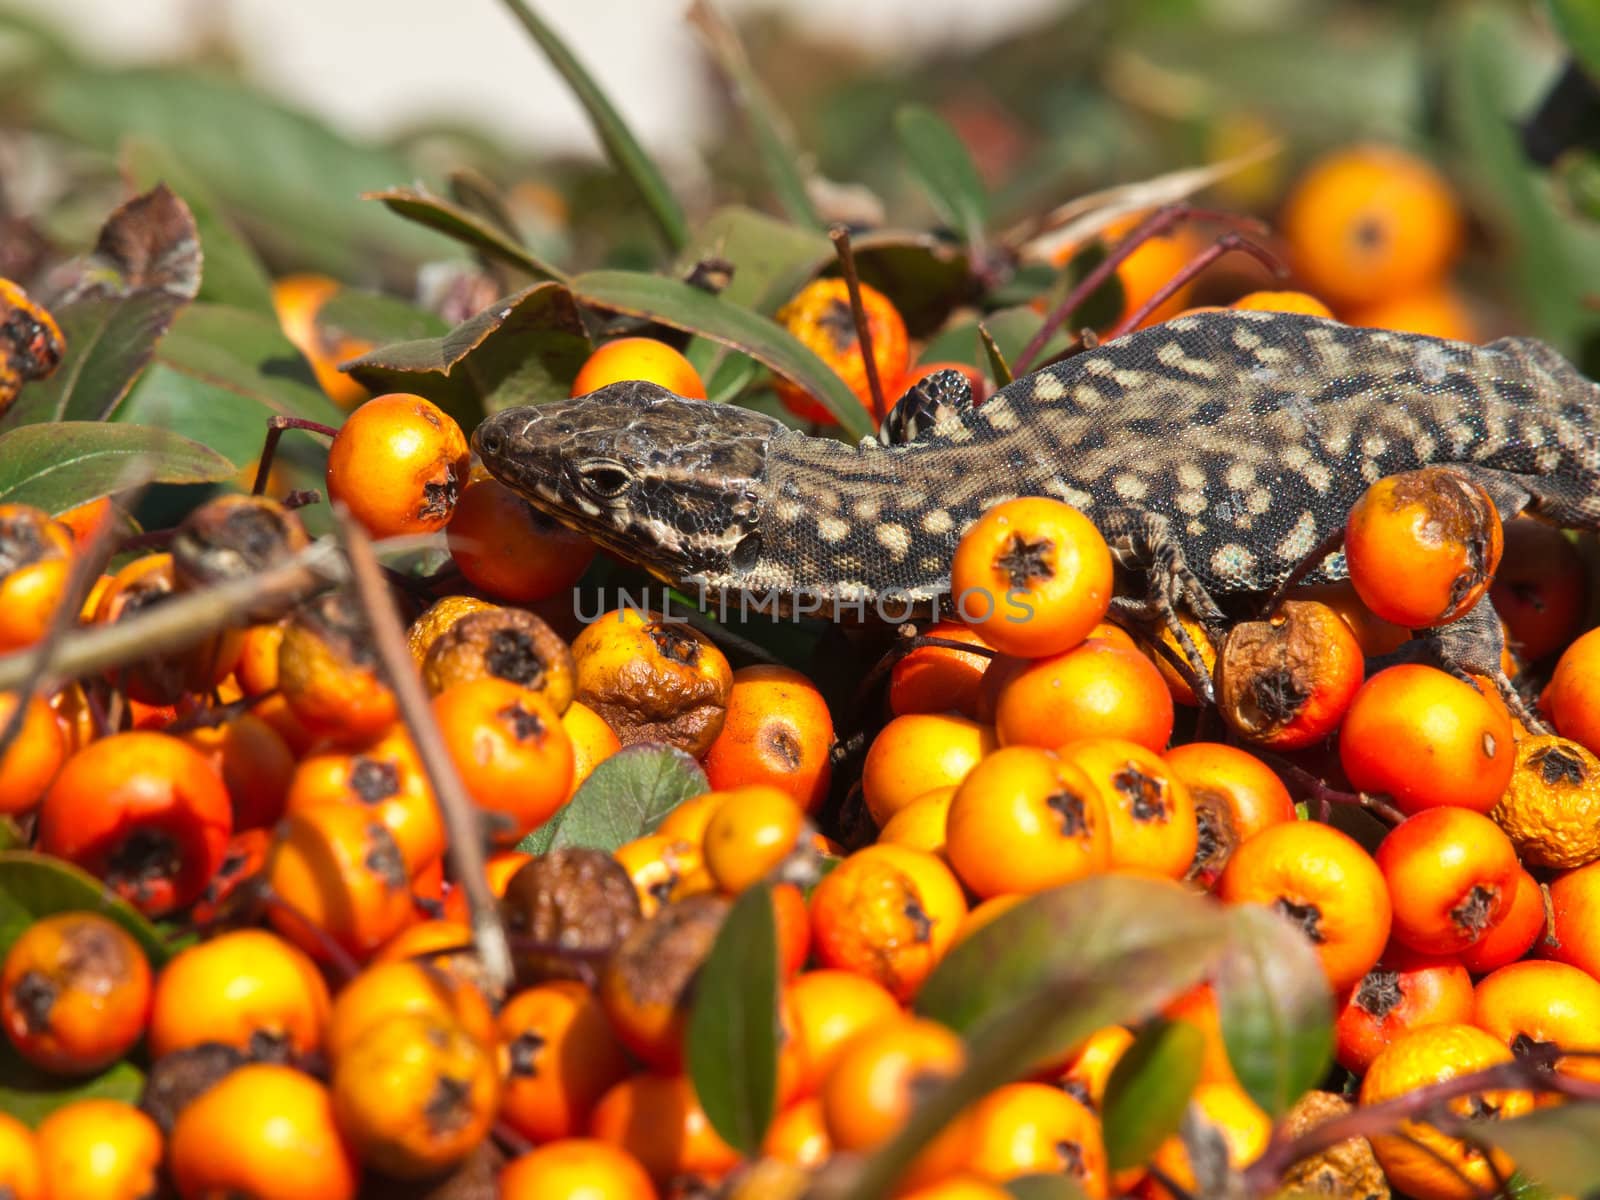 lizard of the branch or orange berries